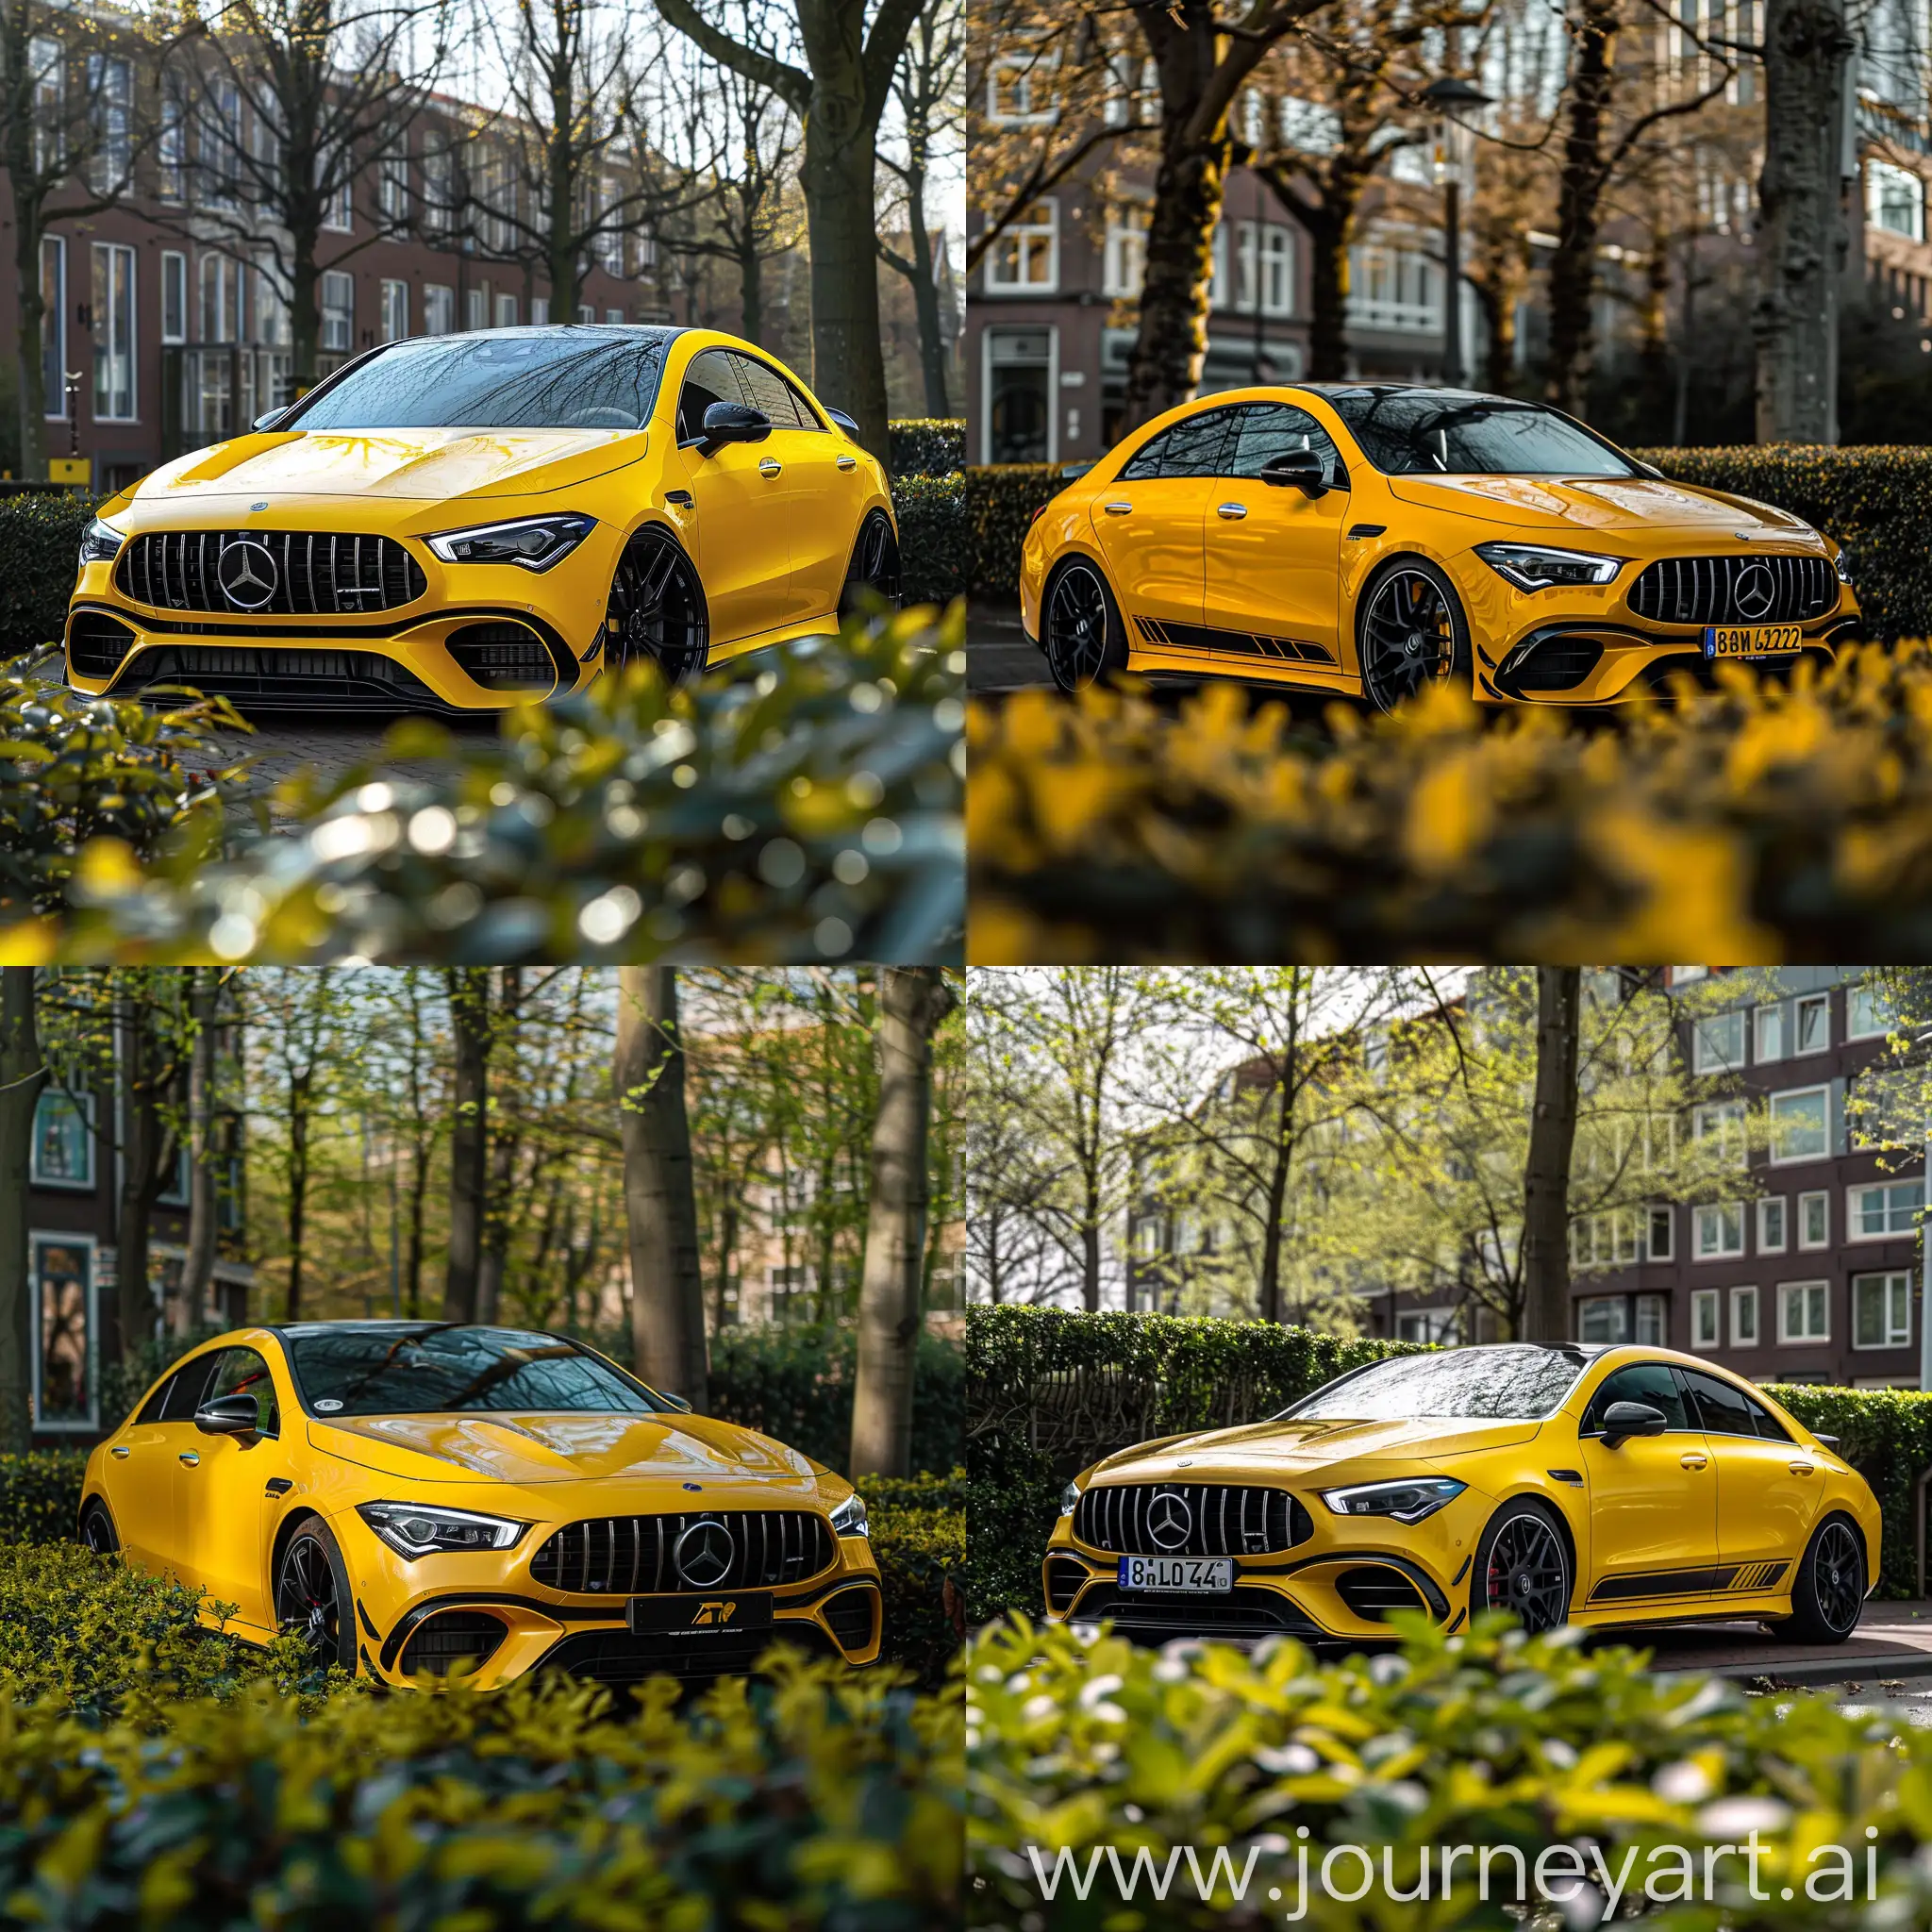 Realistic style Mercedes amg cla45 2022 in geel met zwarte velgen gespot in Rotterdam in bosjes in lente met bladeren 8k Snapchat style Instagram style wallpaper realistic sharp focus 